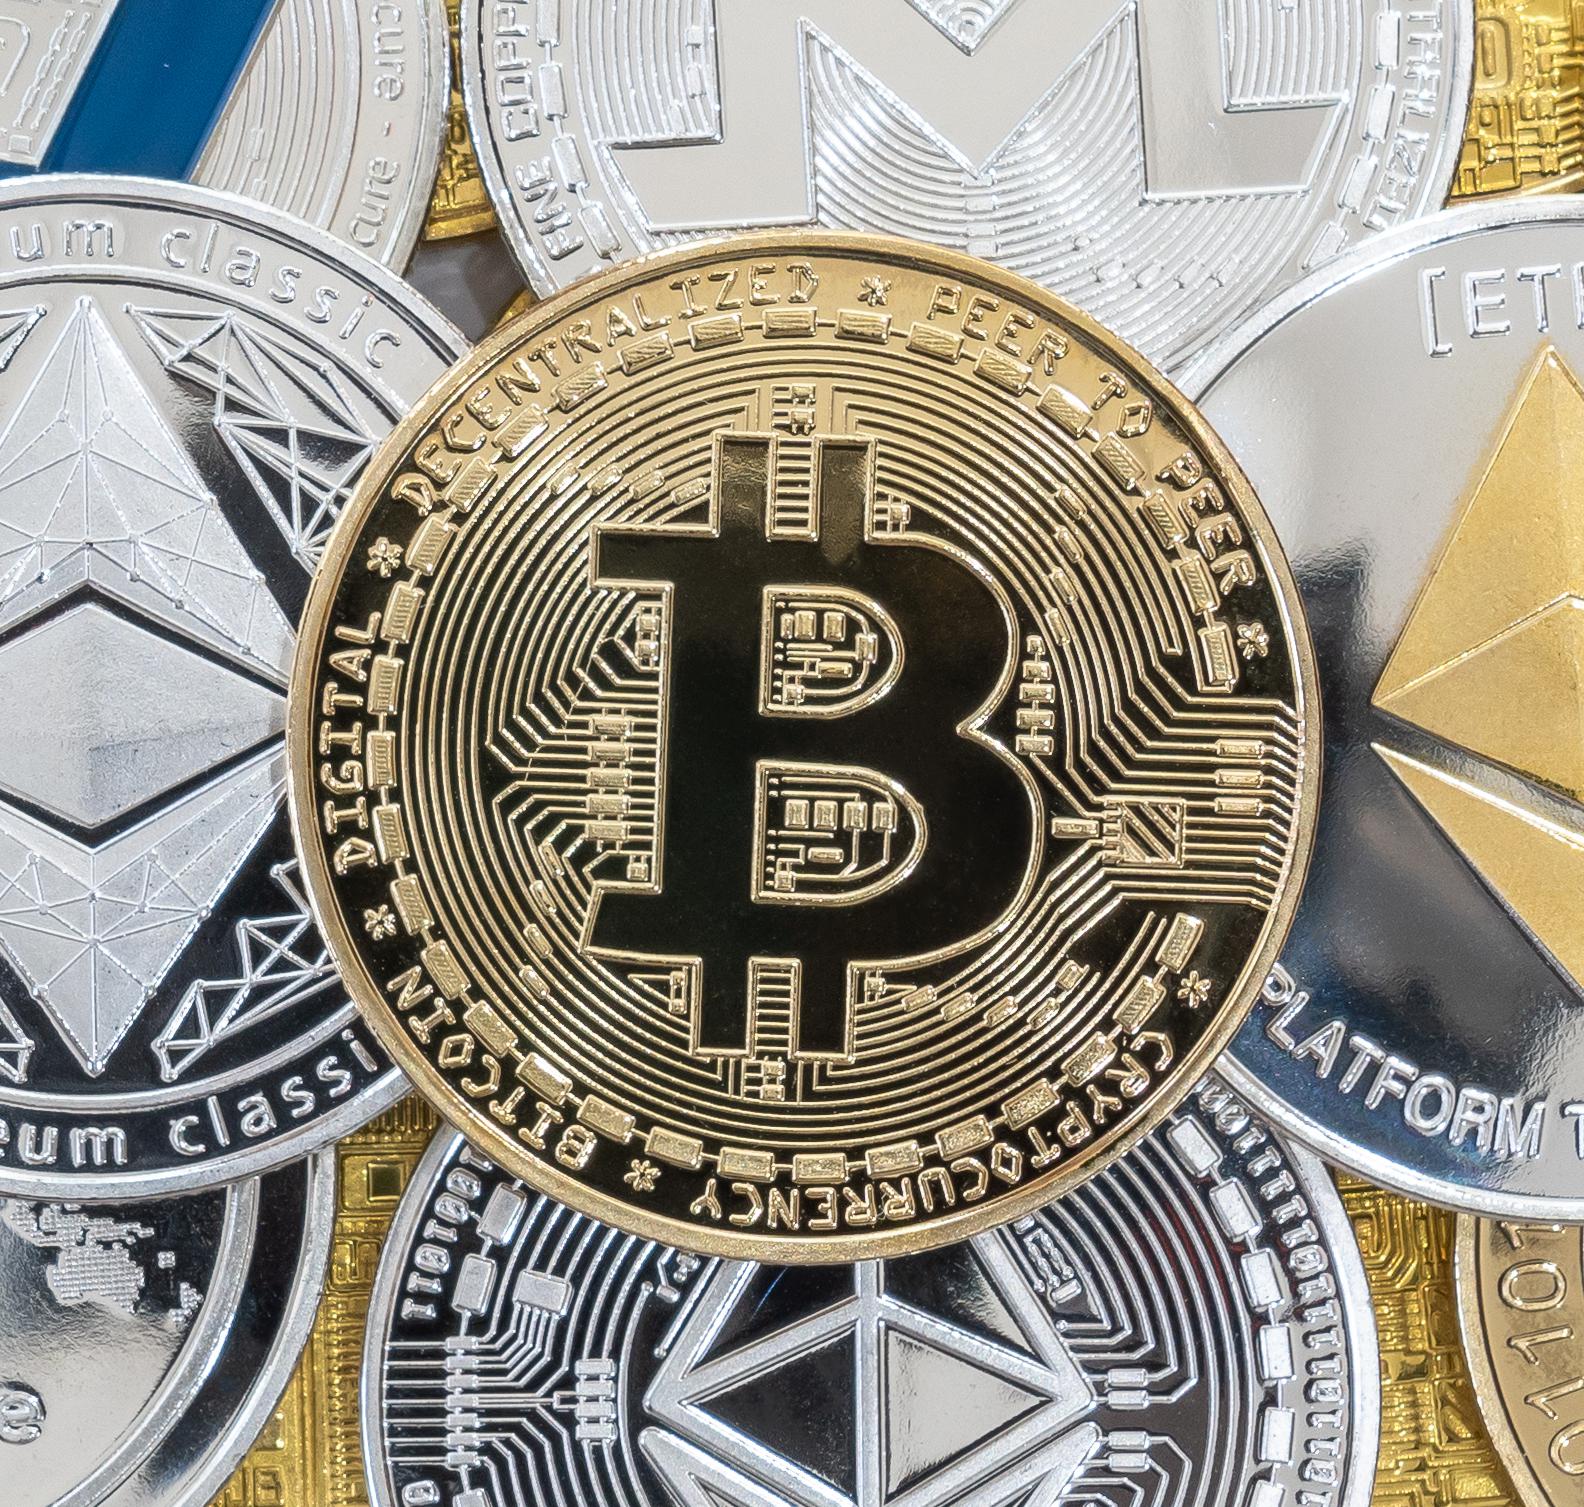 Image featuring crypto-currencies e.g. Bitcoin, Ethereum, Dogecoin, Cardano